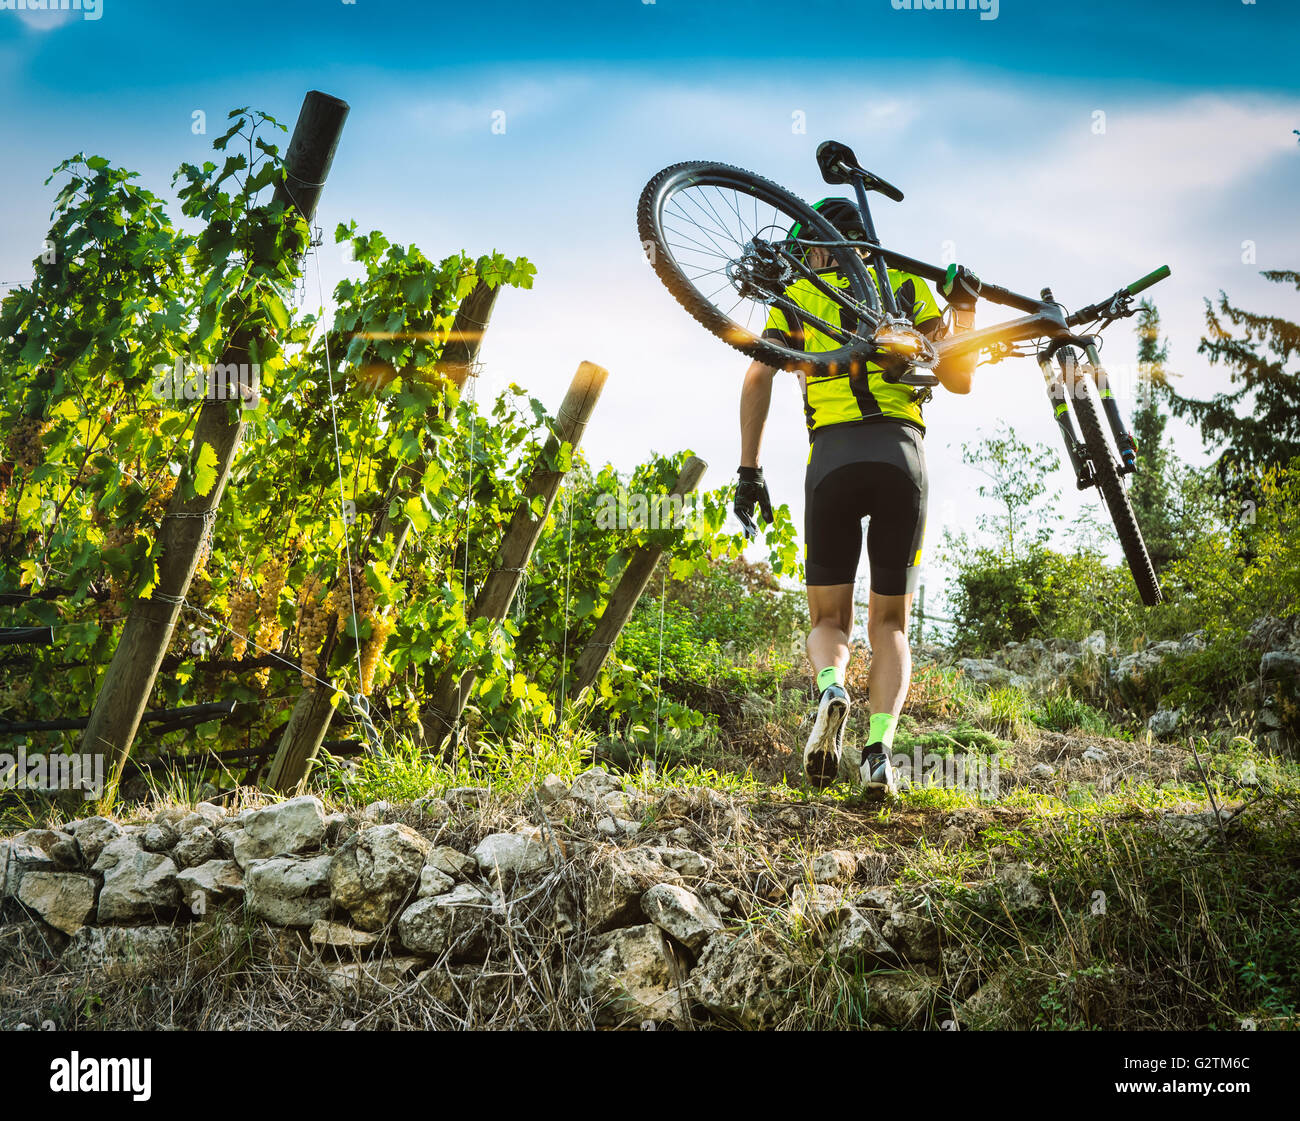 Cyclist raises the mountain bikes on their shoulders to climb a steep trail through the vineyards. Stock Photo